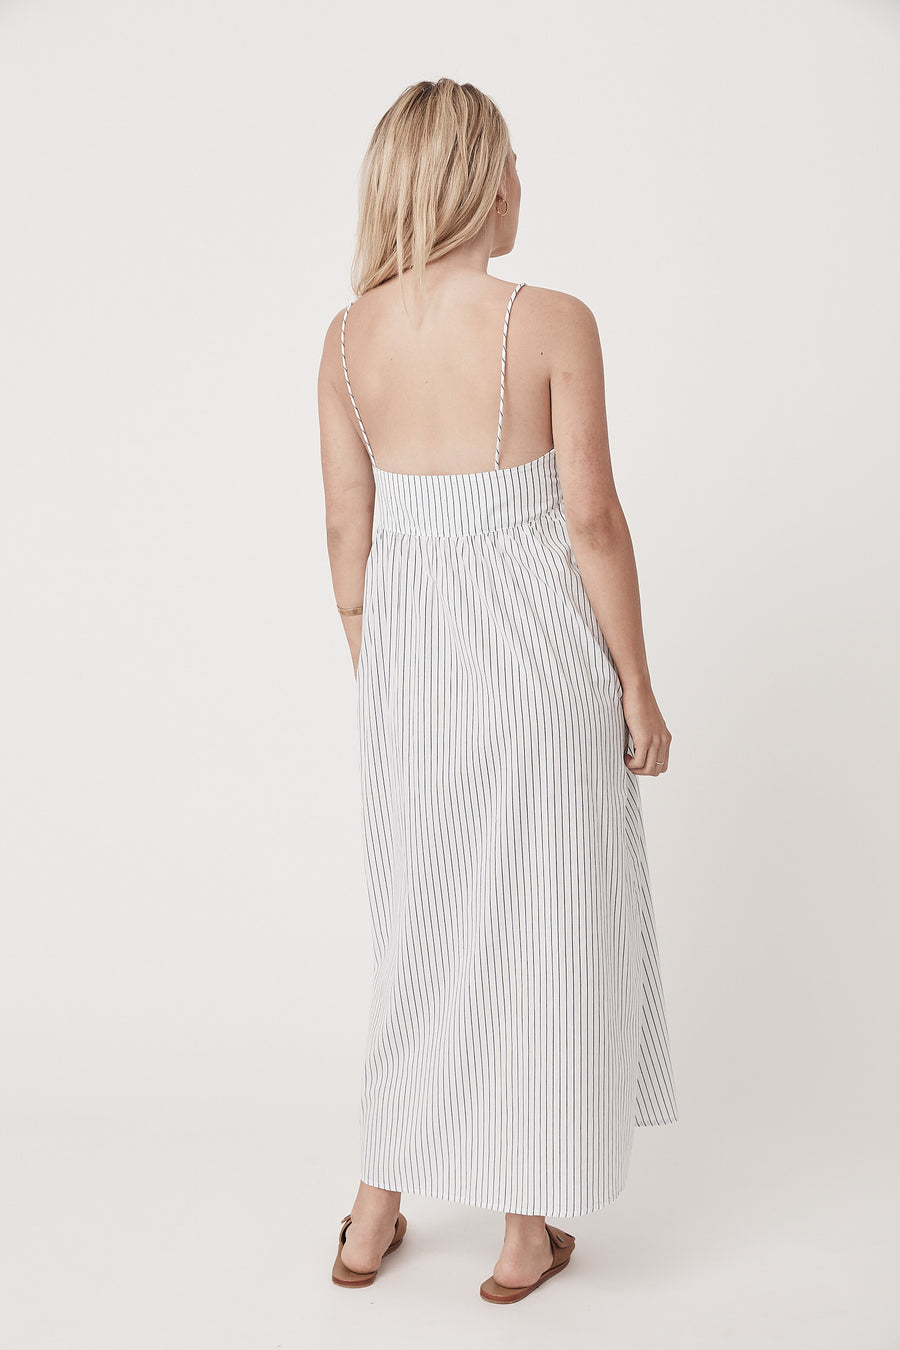 Island Dress (Vertical Stripe) - FINAL SALE